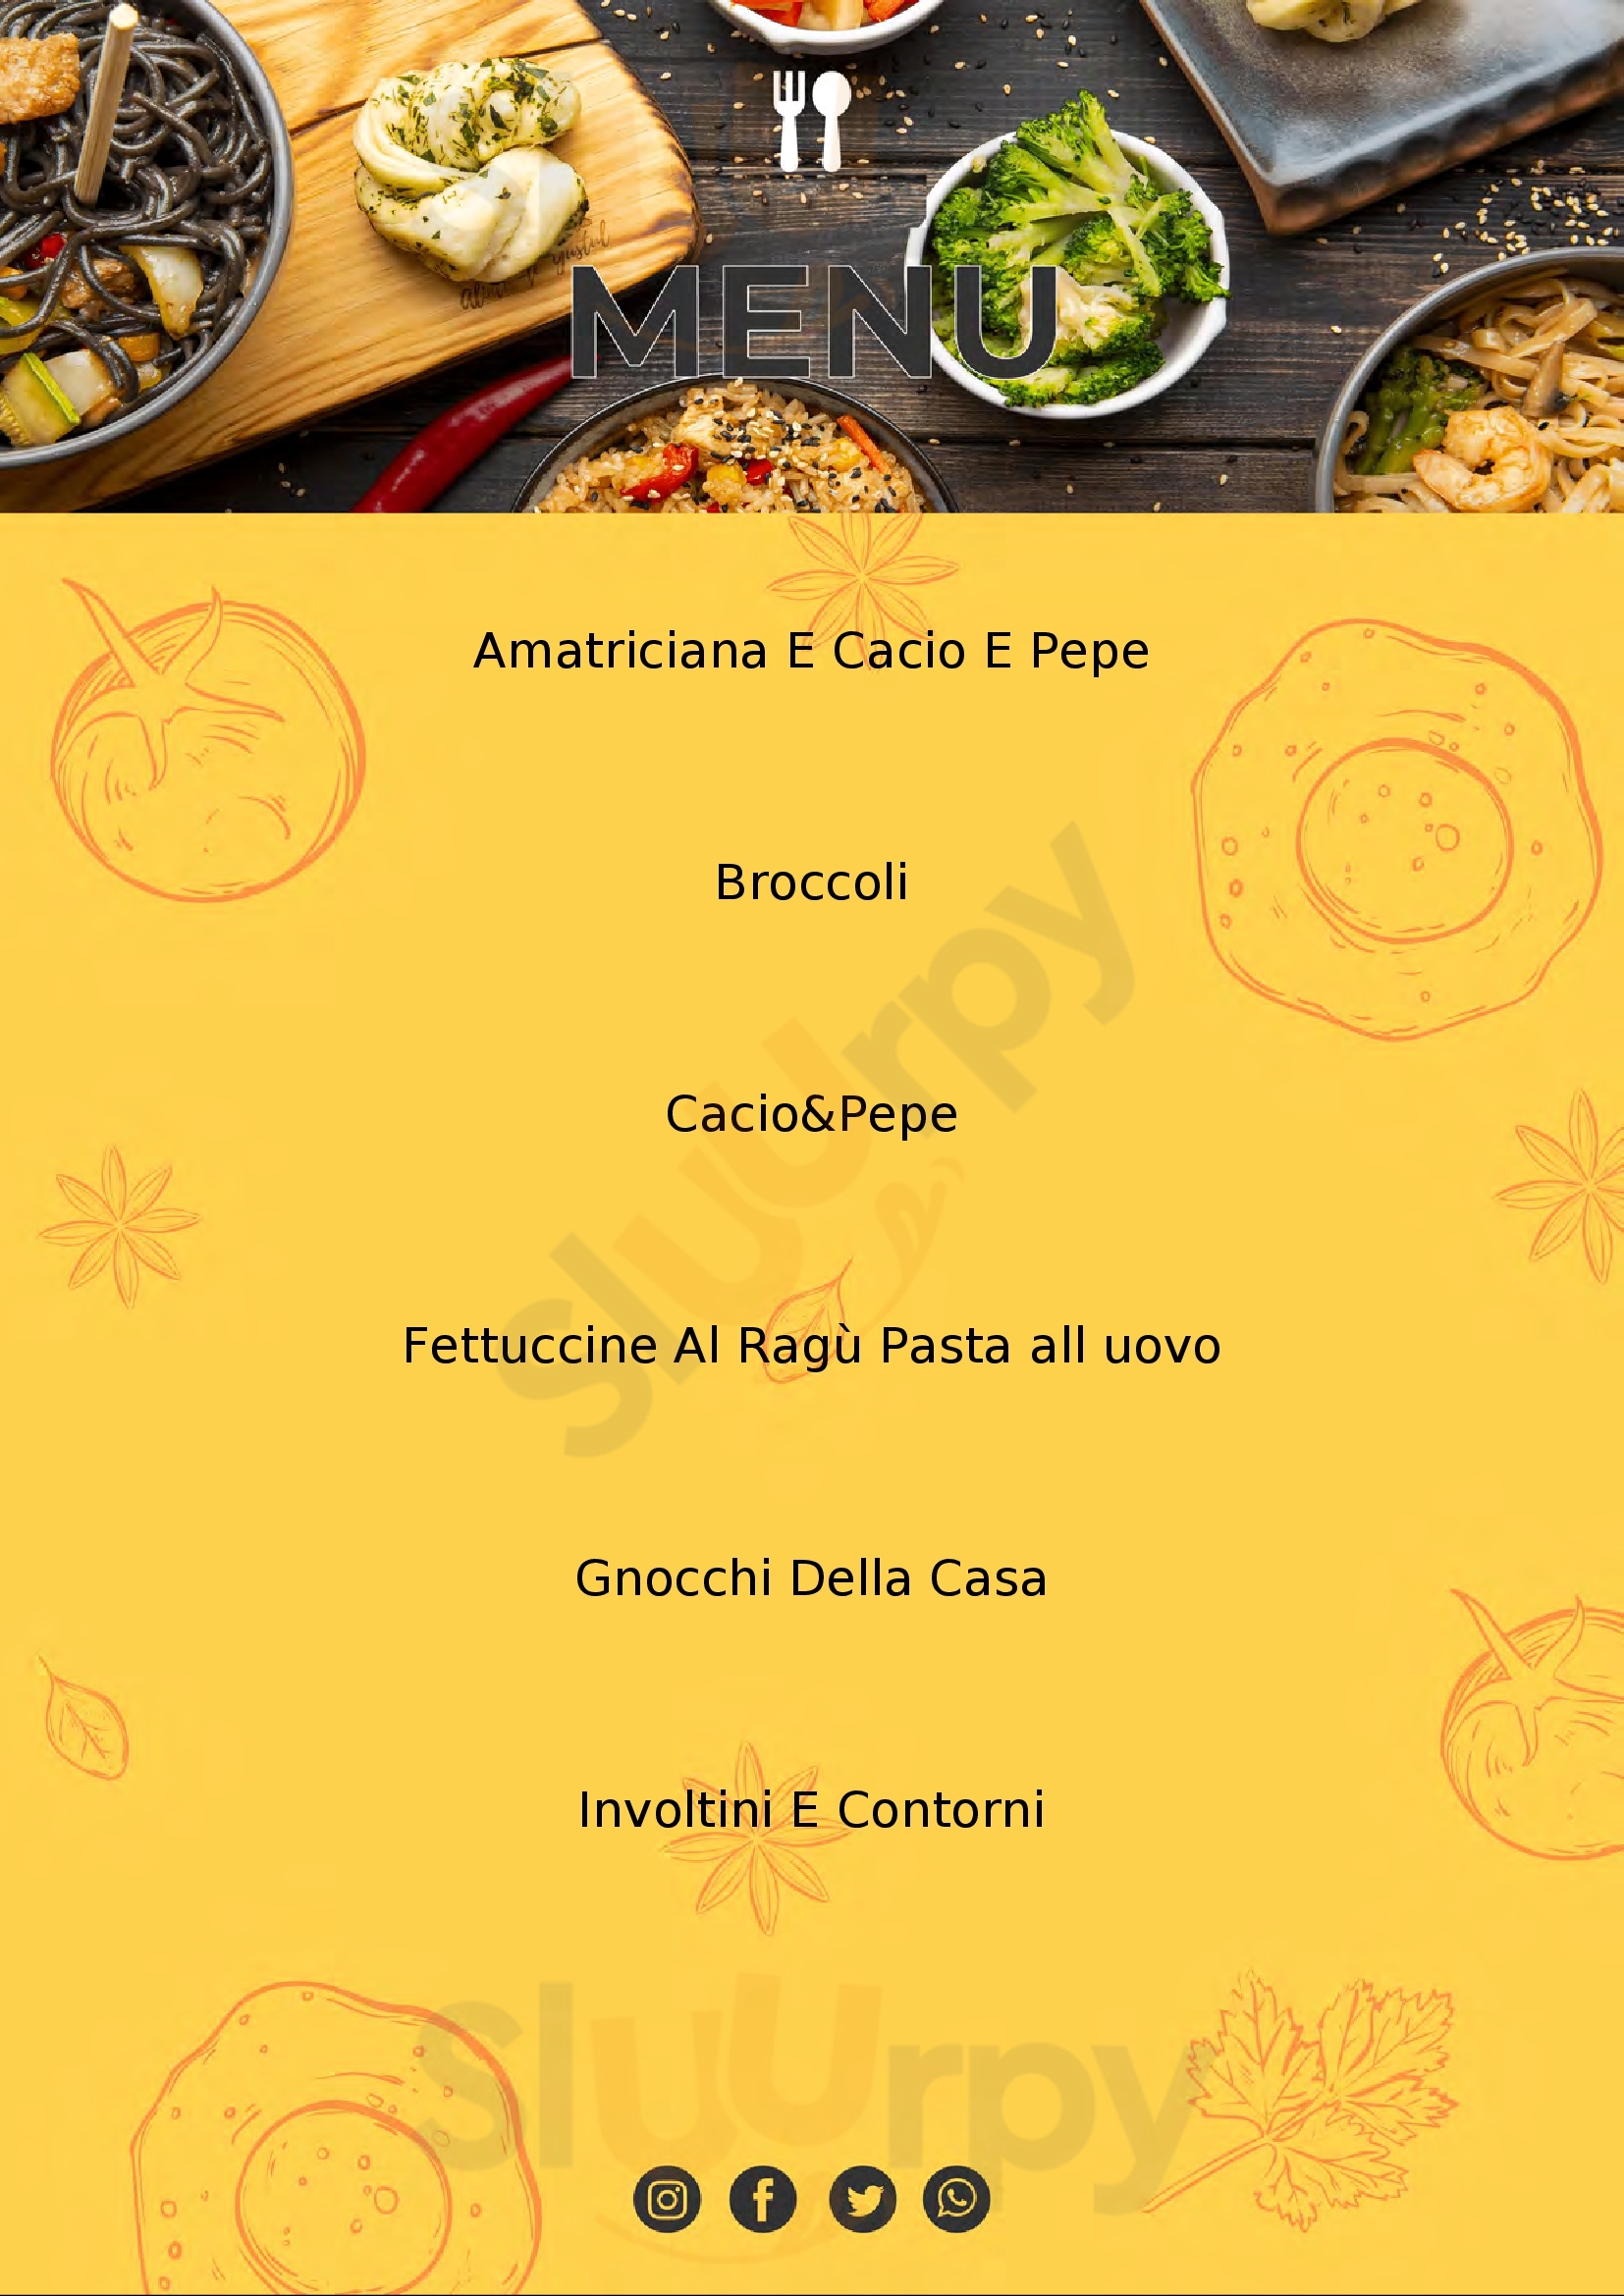 Trattoria Cucina Roma menù 1 pagina